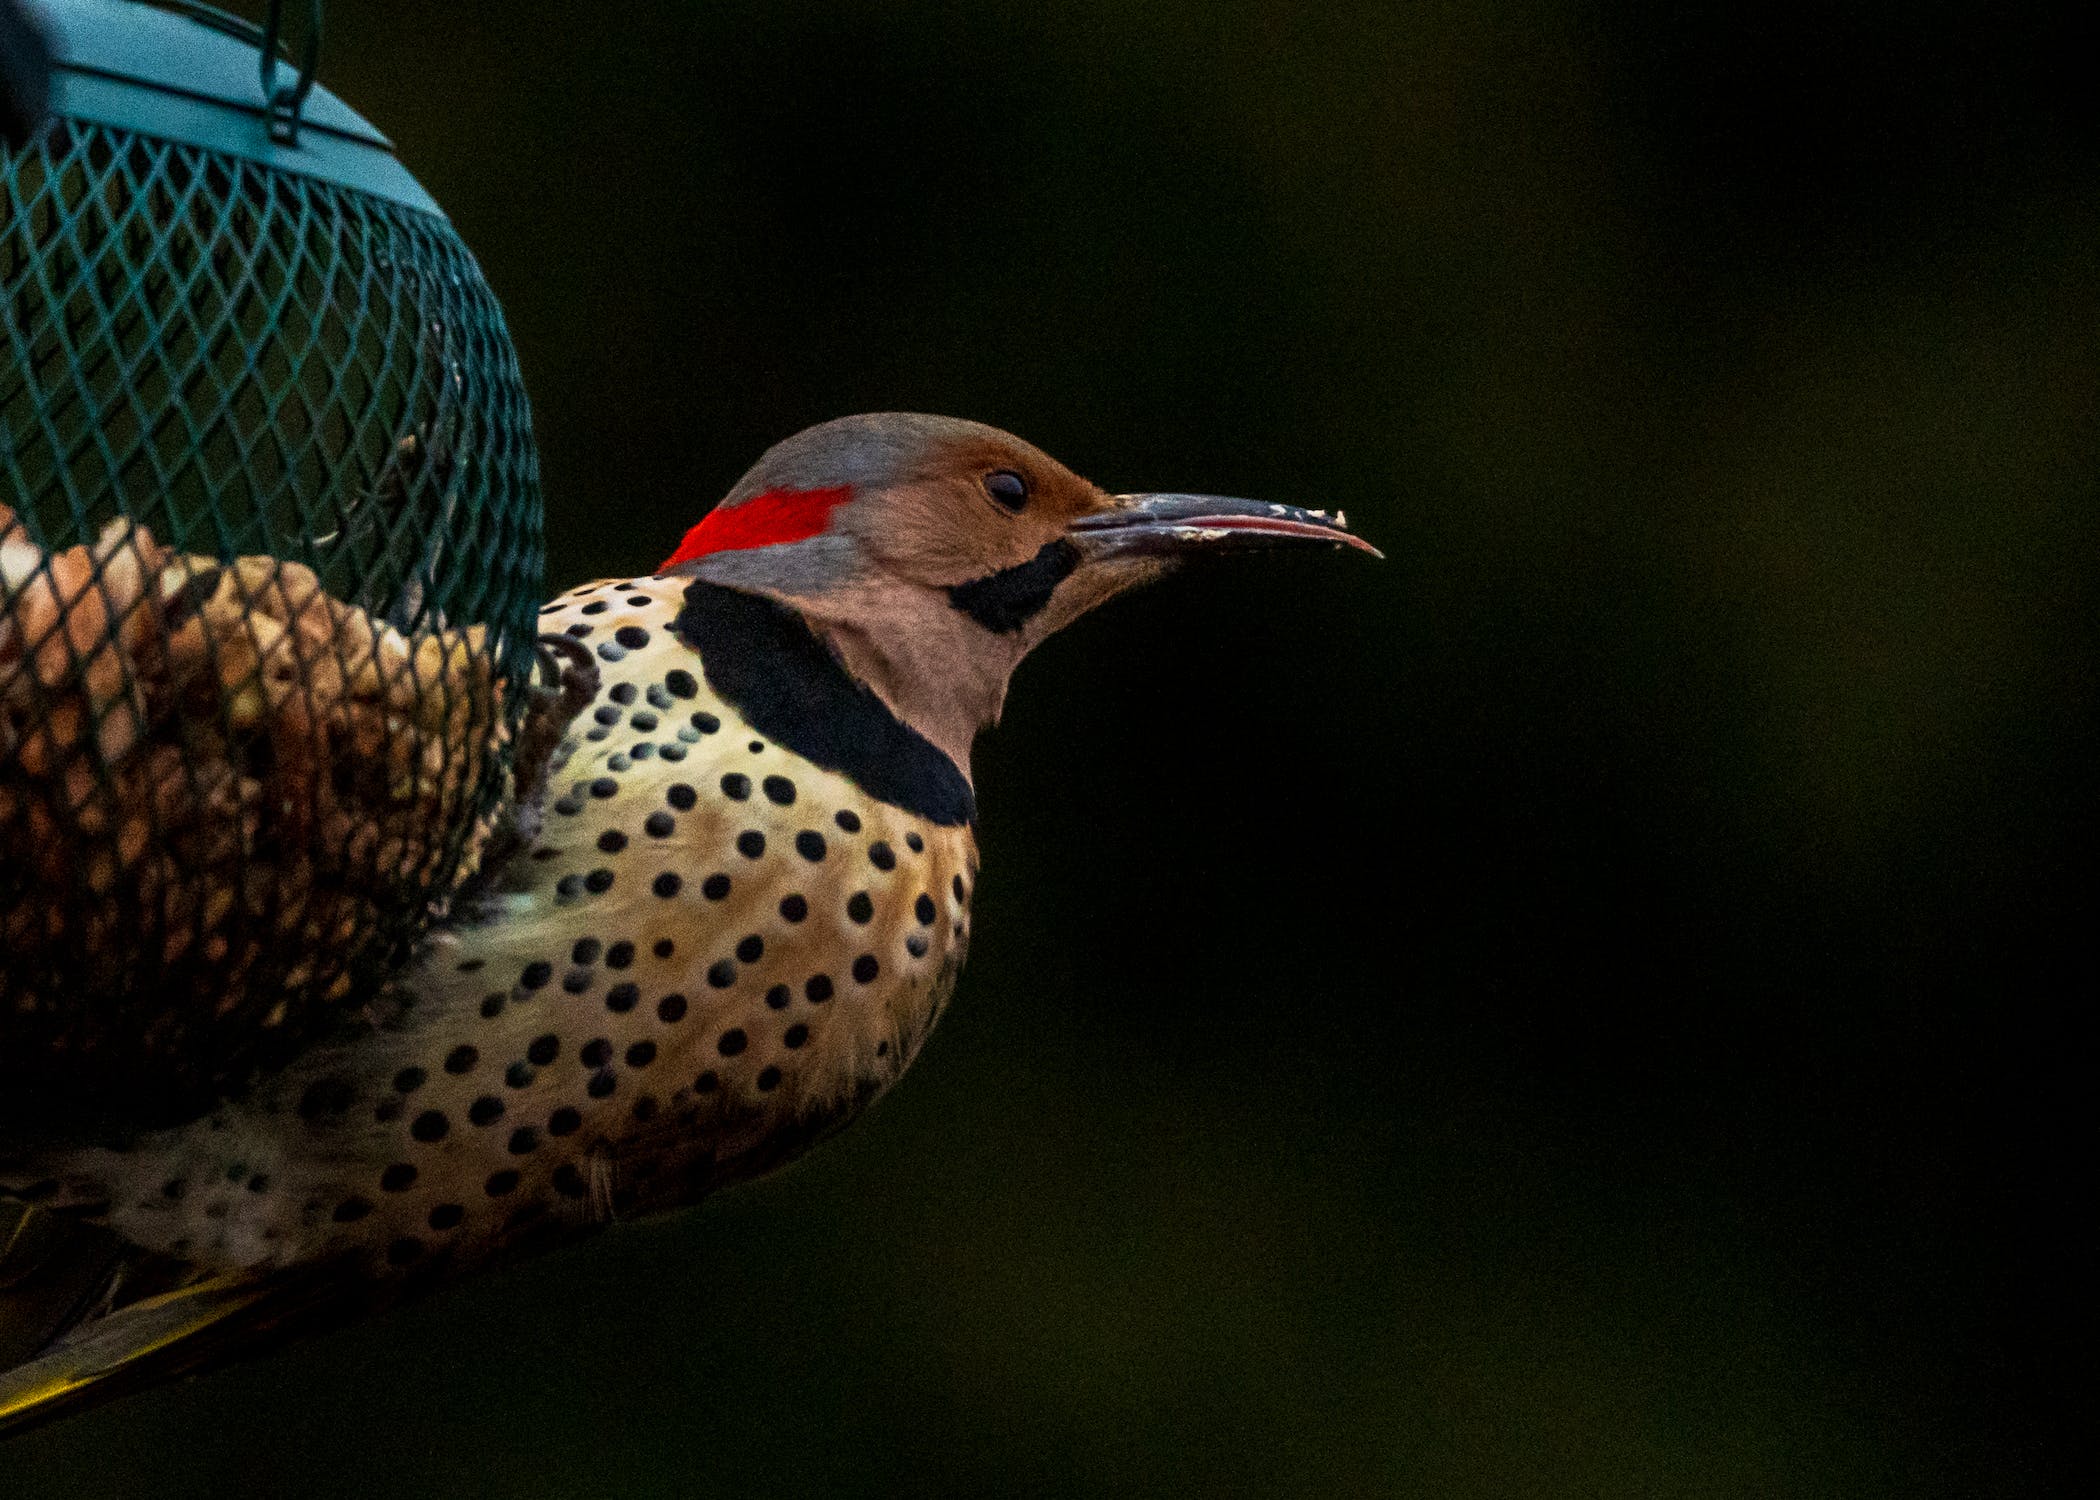 Black background with a woodpecker on a bird feeder